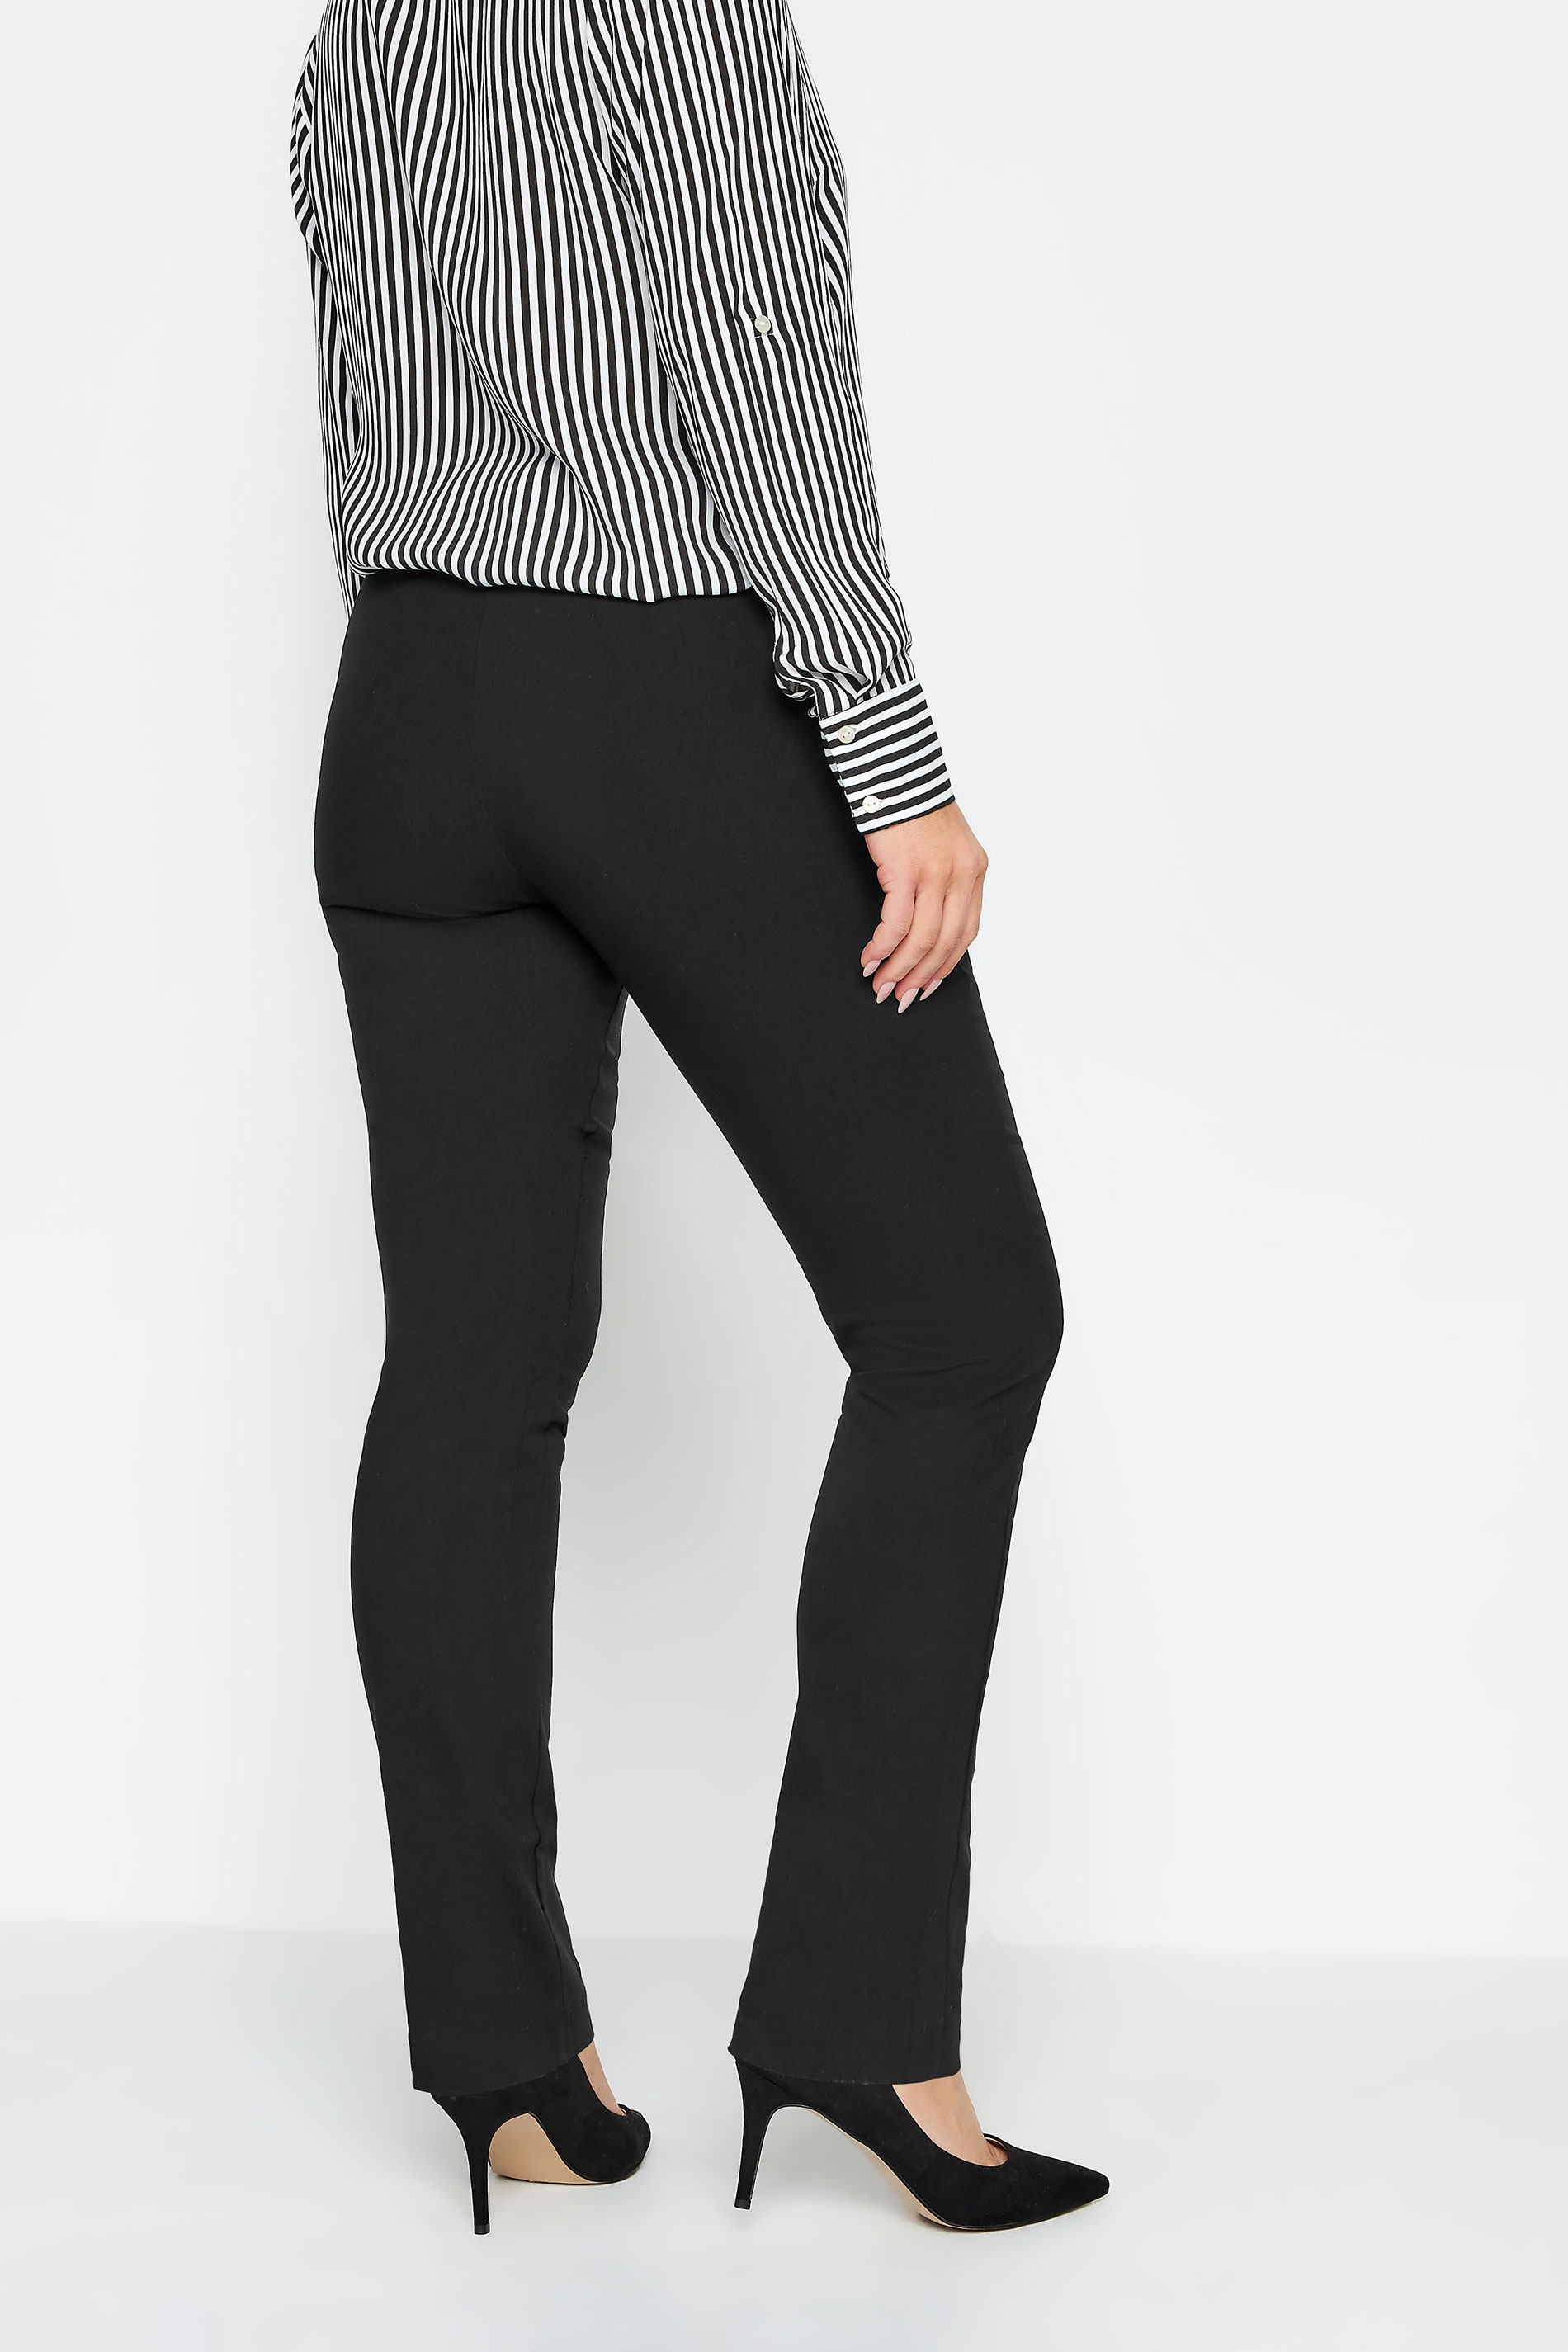 M&Co Black Straight Leg Bengaline Trousers | M&Co  3